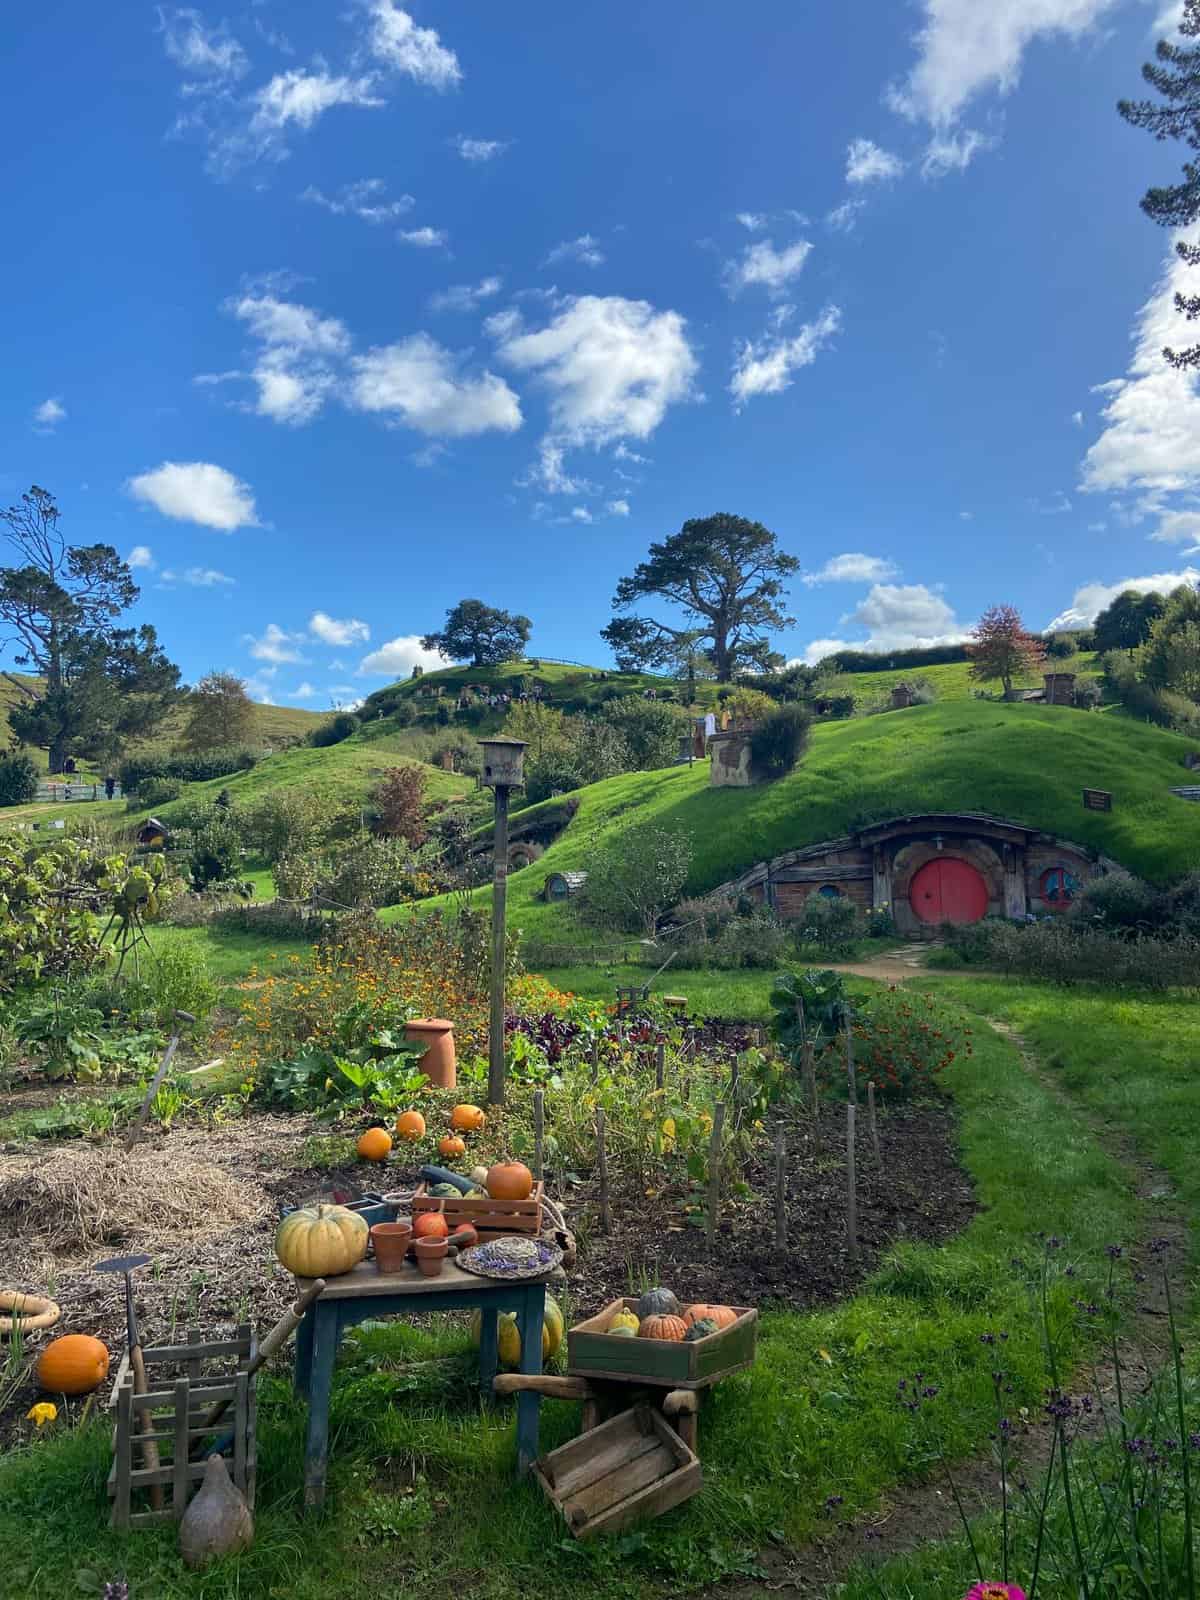 movie set tour of Hobbiton village in New Zealand